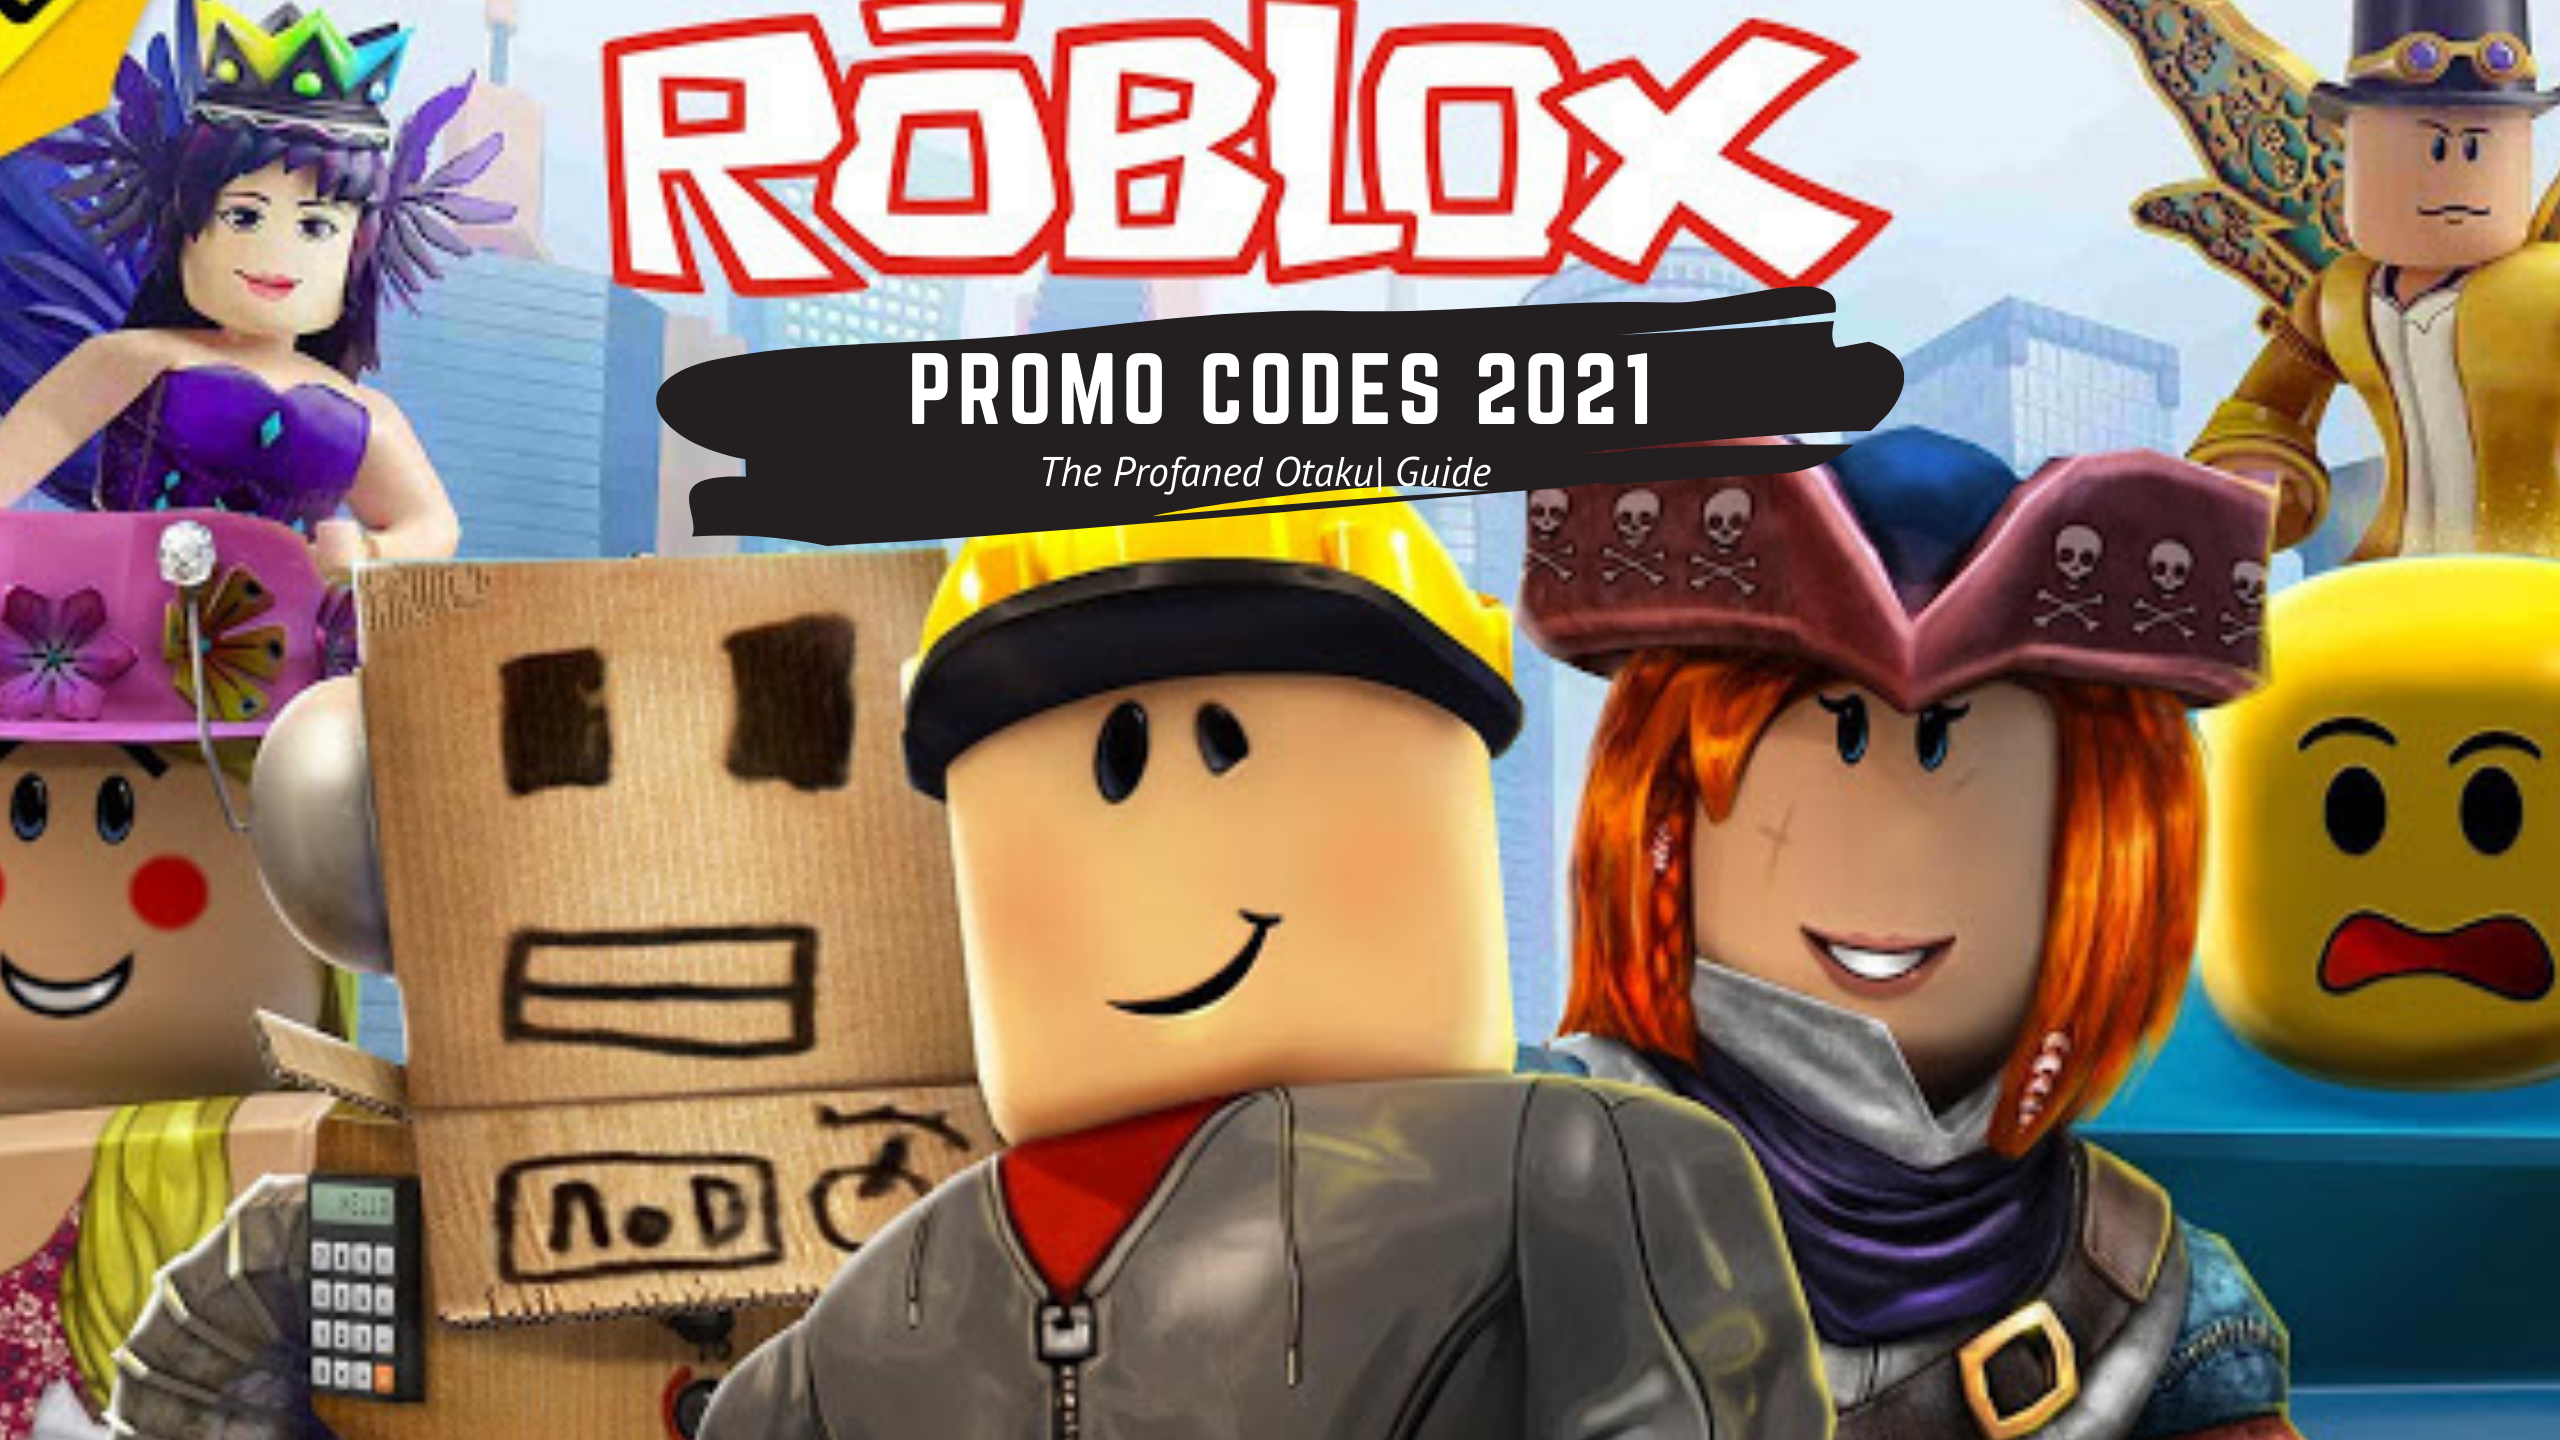 Roblox Promo Codes 2021 The Profaned Otaku - roblox promo codes 2021 roblox